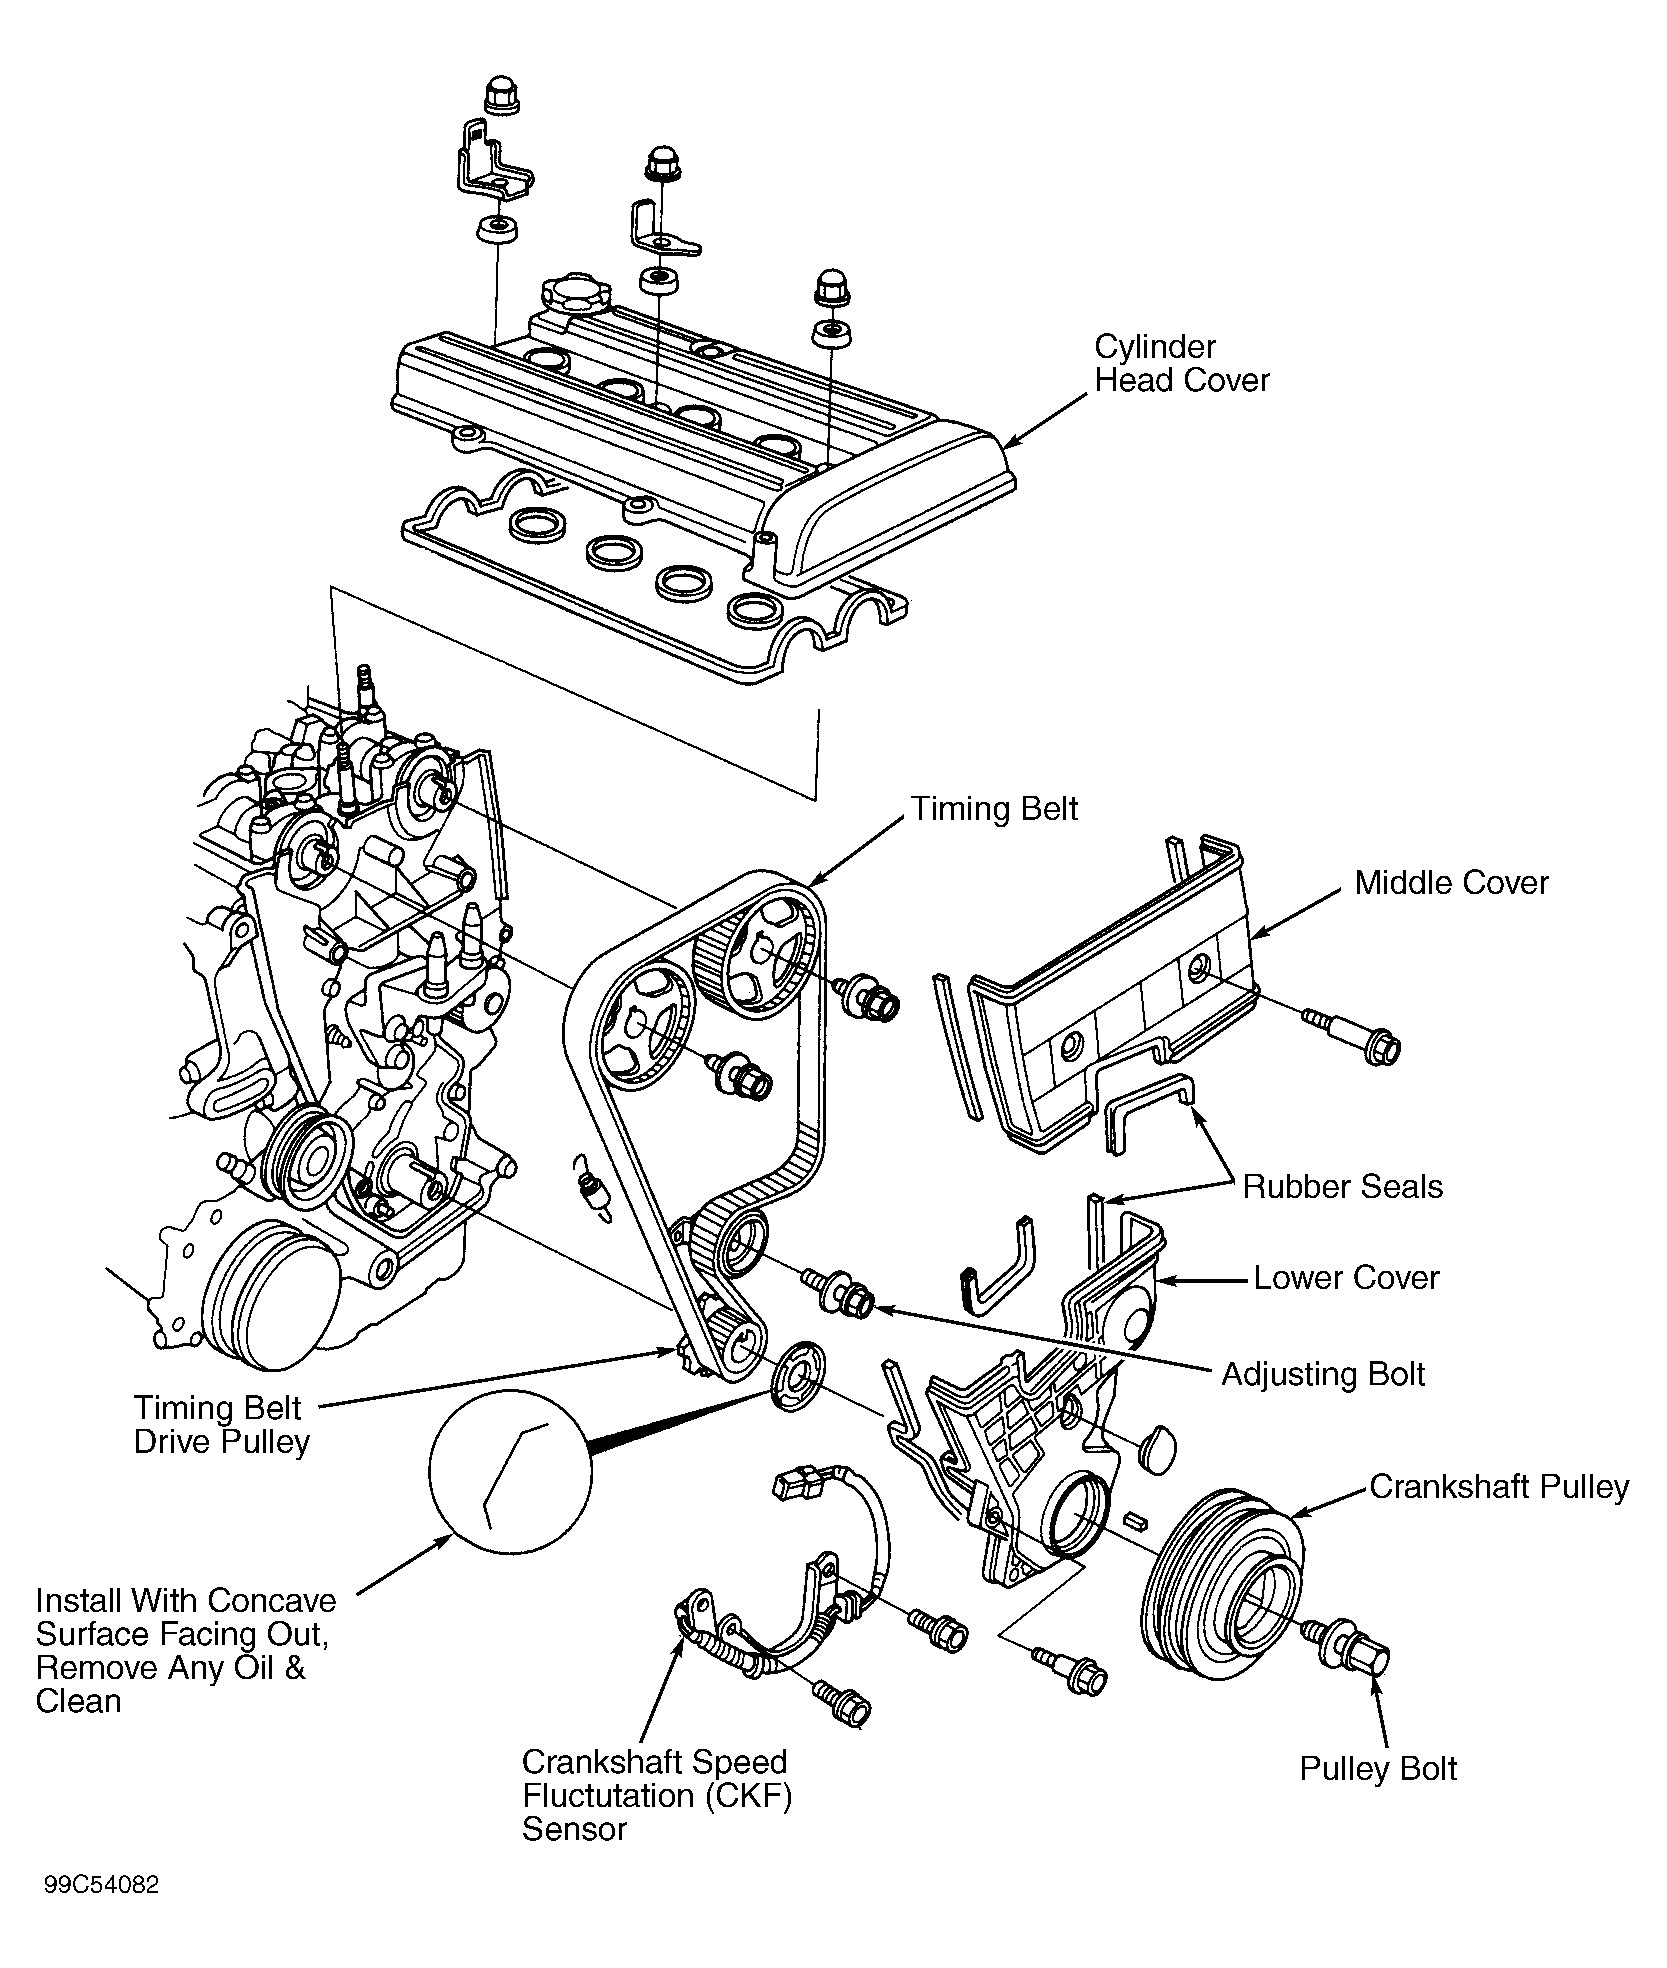 2001 Honda Crv Engine Diagram 2001 Honda Cr V Serpentine Belt Routing and Timing Belt Diagrams Of 2001 Honda Crv Engine Diagram